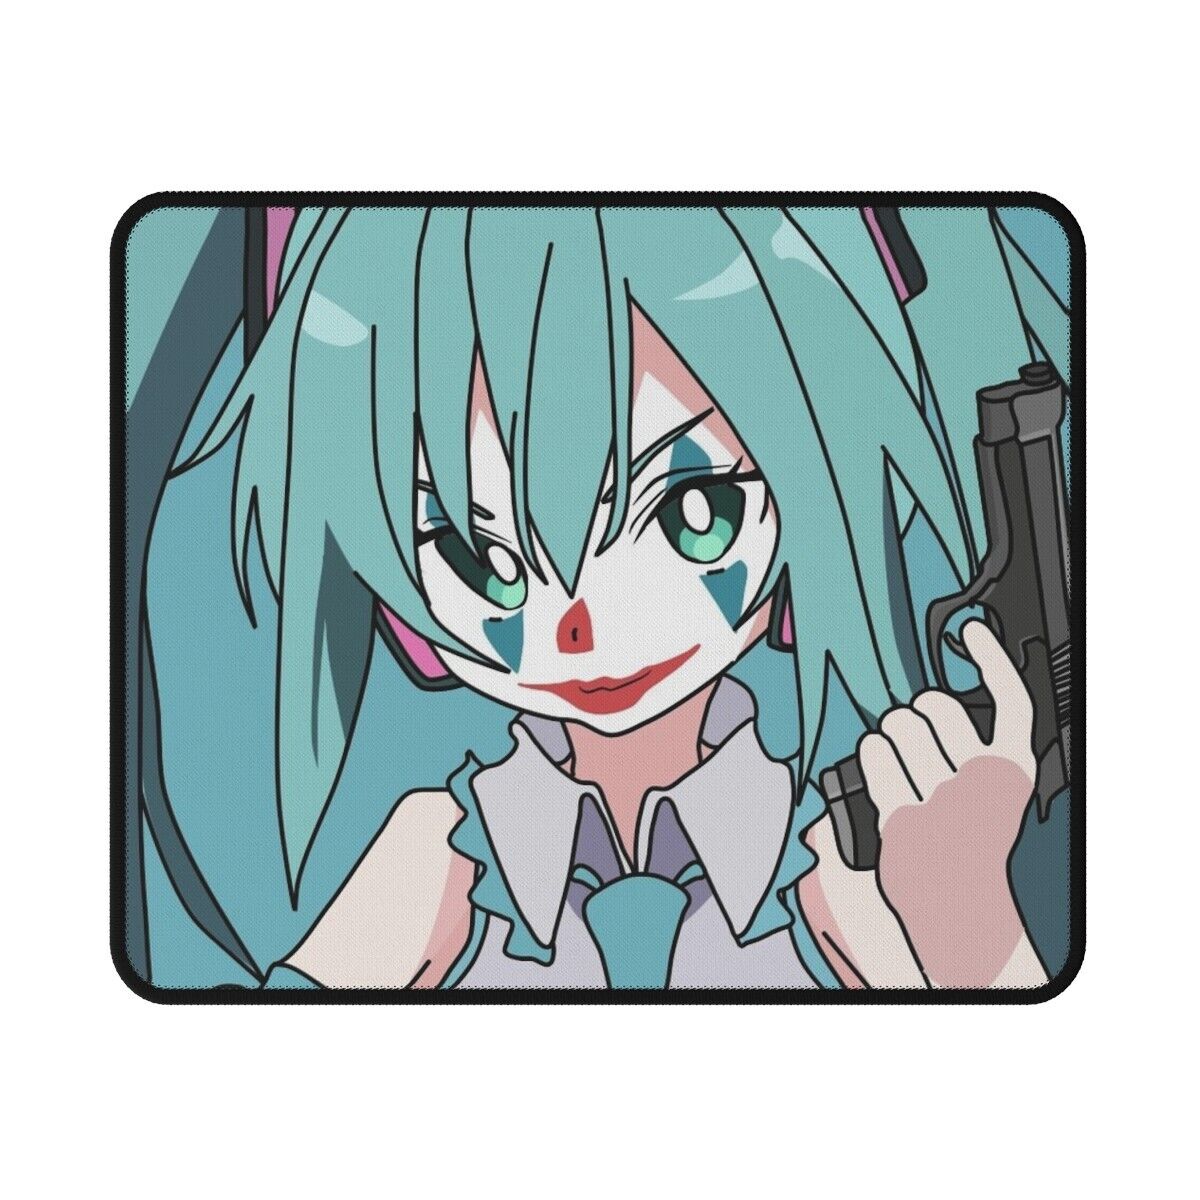 Hatsune Miku Joker Non-Slip Gaming Mouse Pad